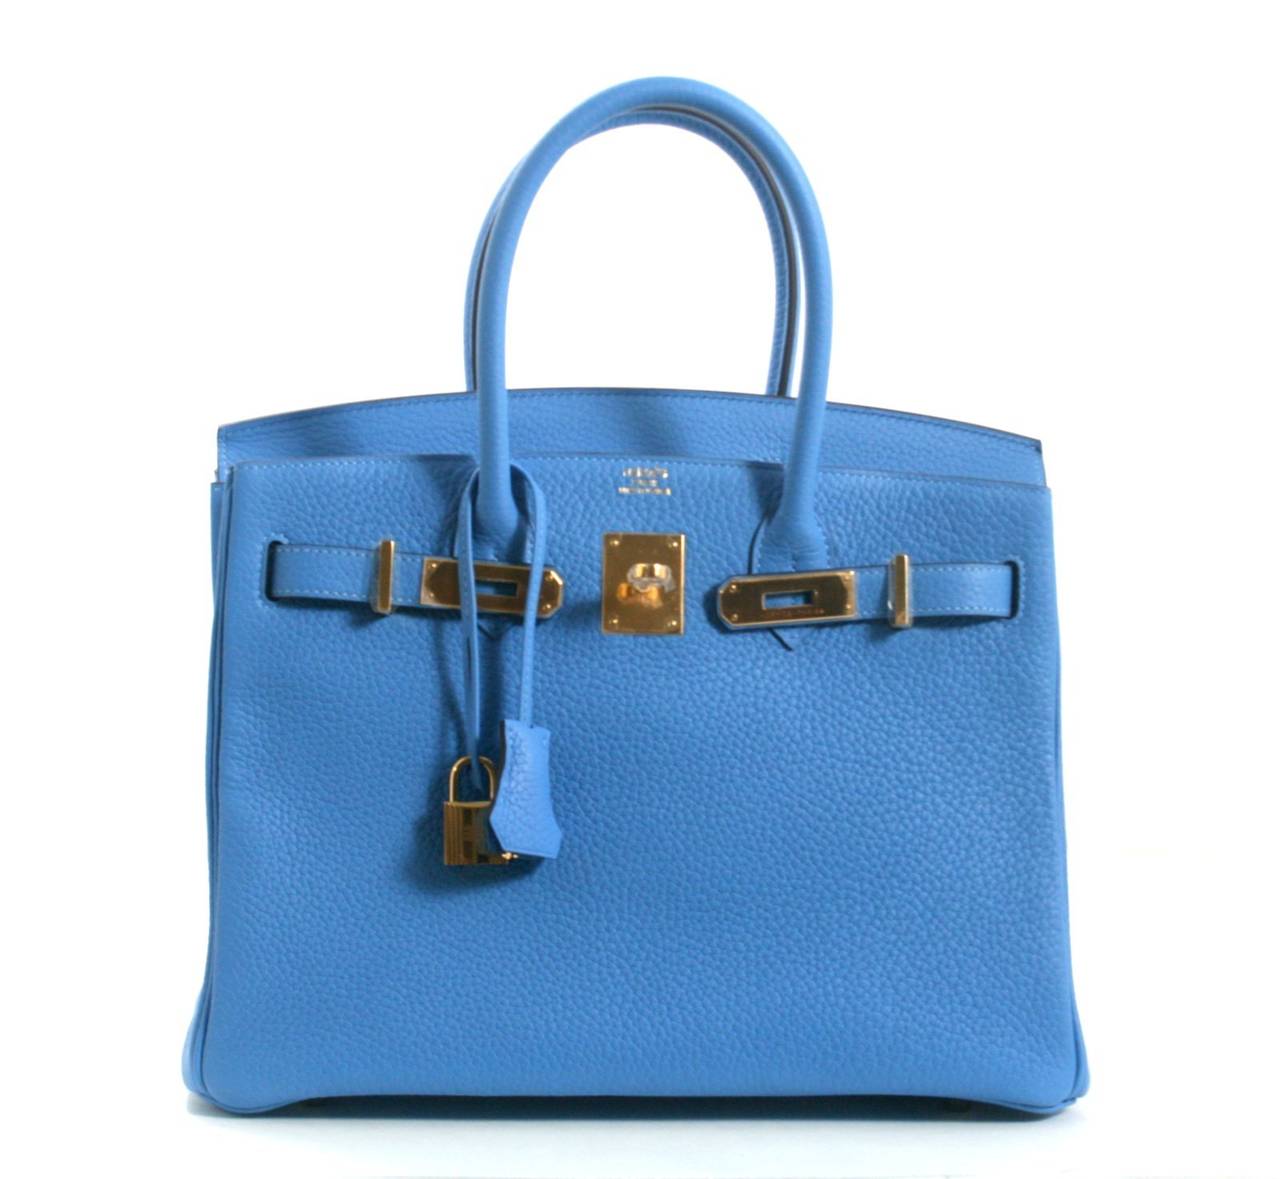 Hermès 30 cm Bleu Paradis Clemence Birkin Bag with GHW 3